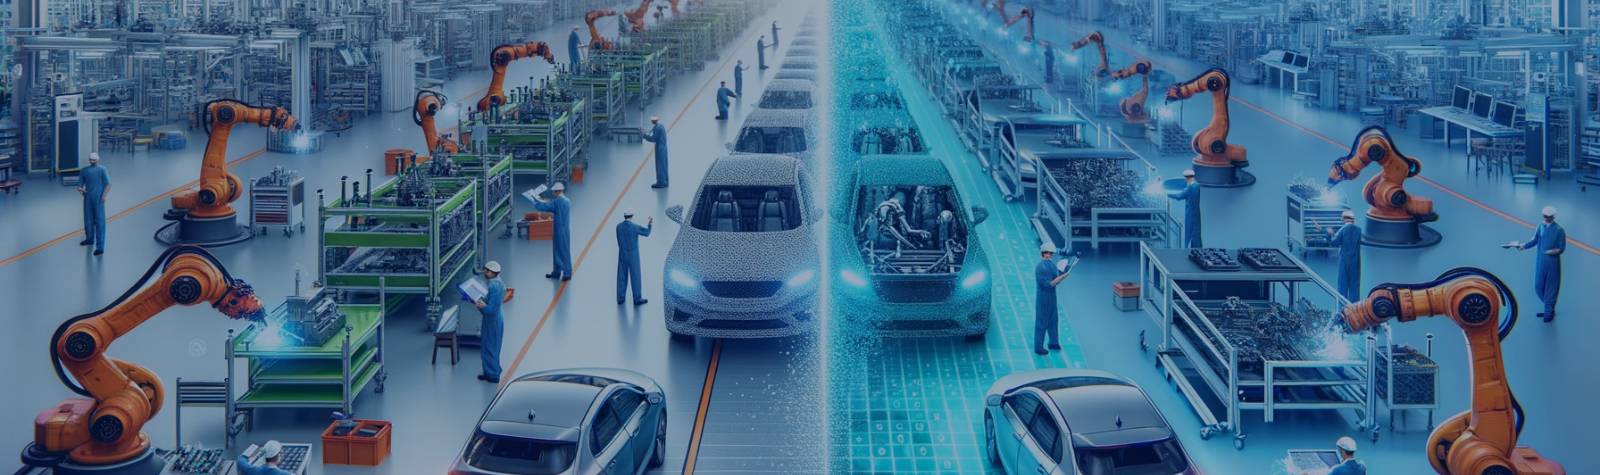 Digital Disruption in Automotive Supply Chains